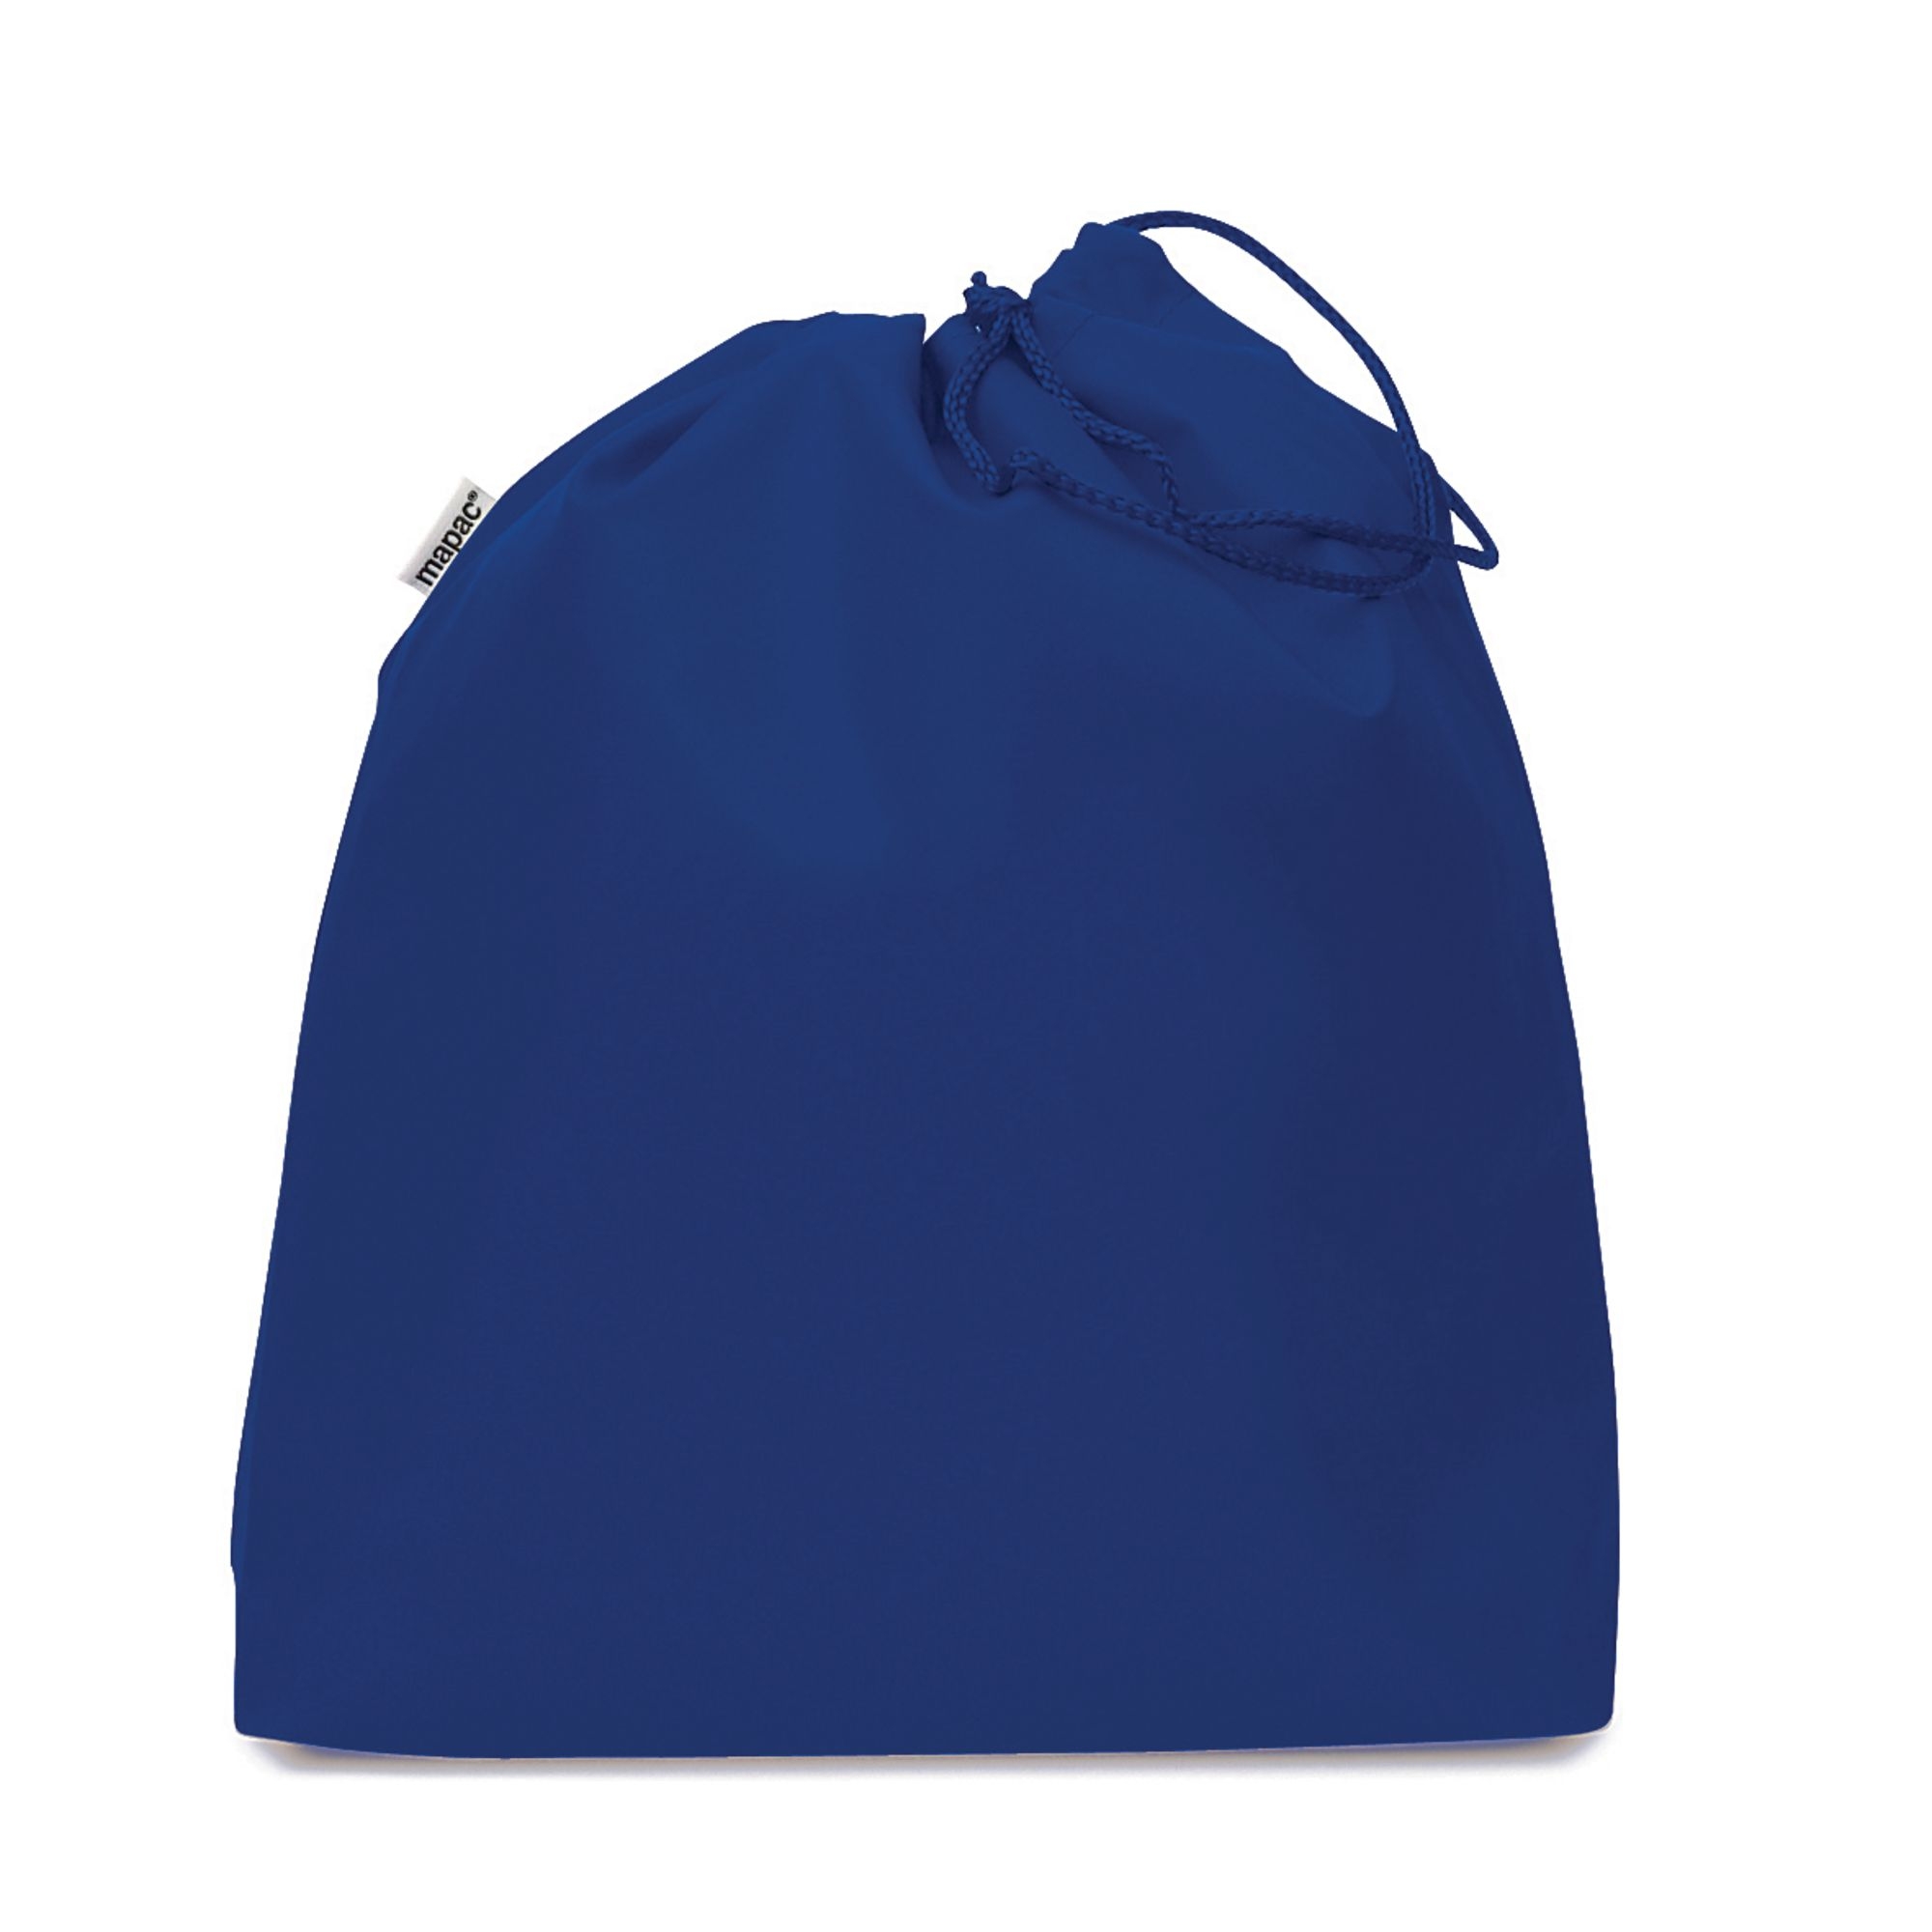 Plain Gym Bag Royal Blue - Pack of 25